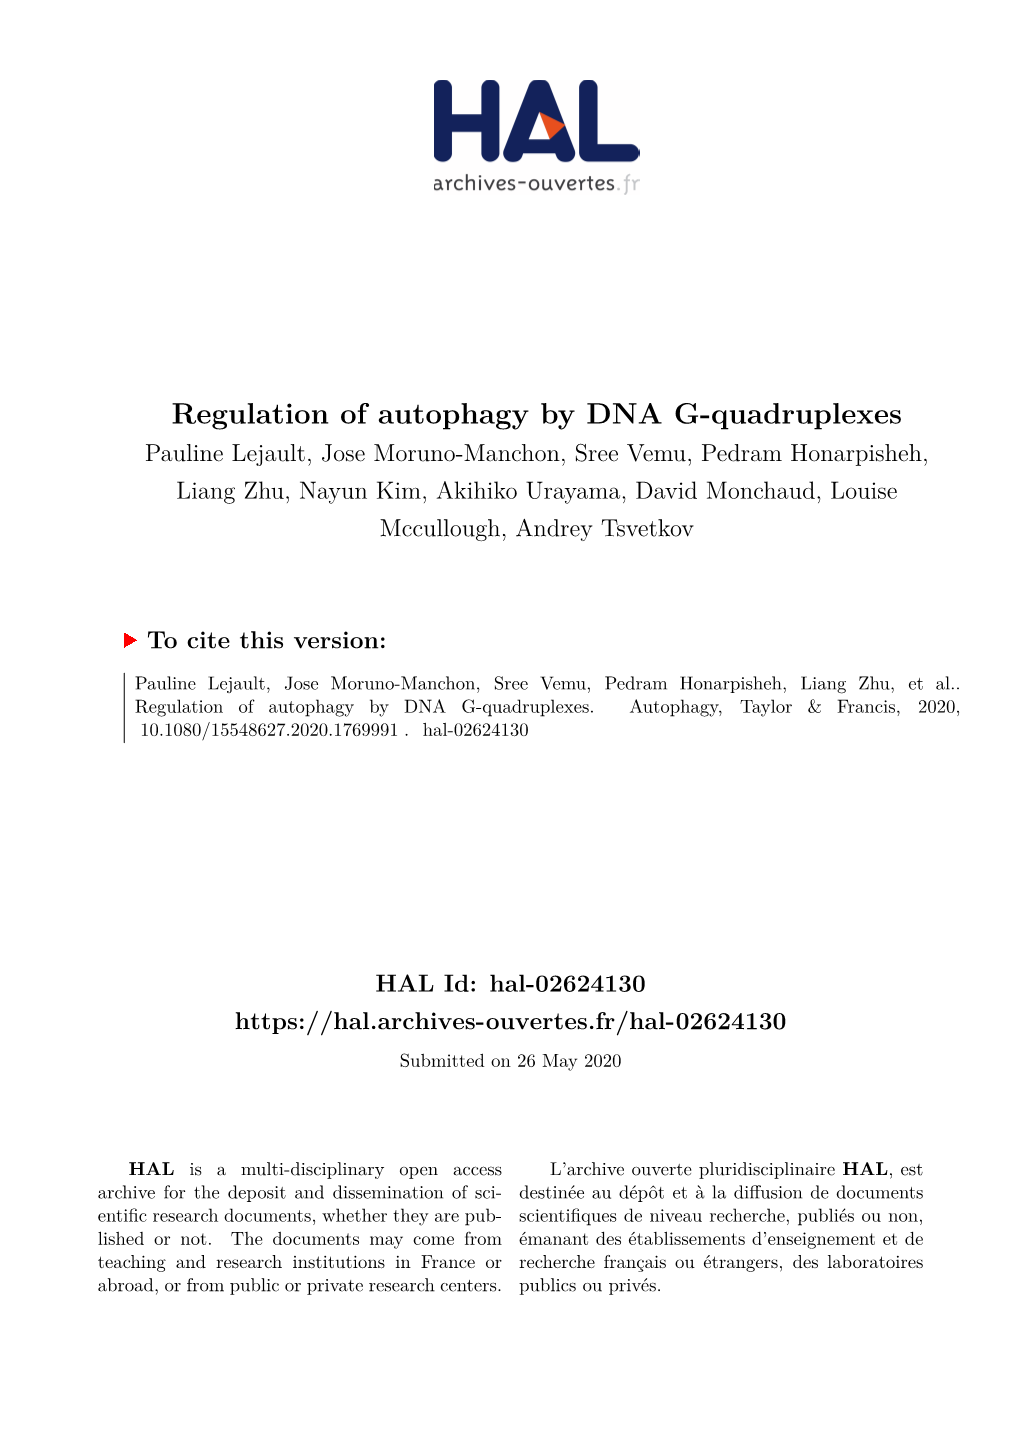 Regulation of Autophagy by DNA G-Quadruplexes